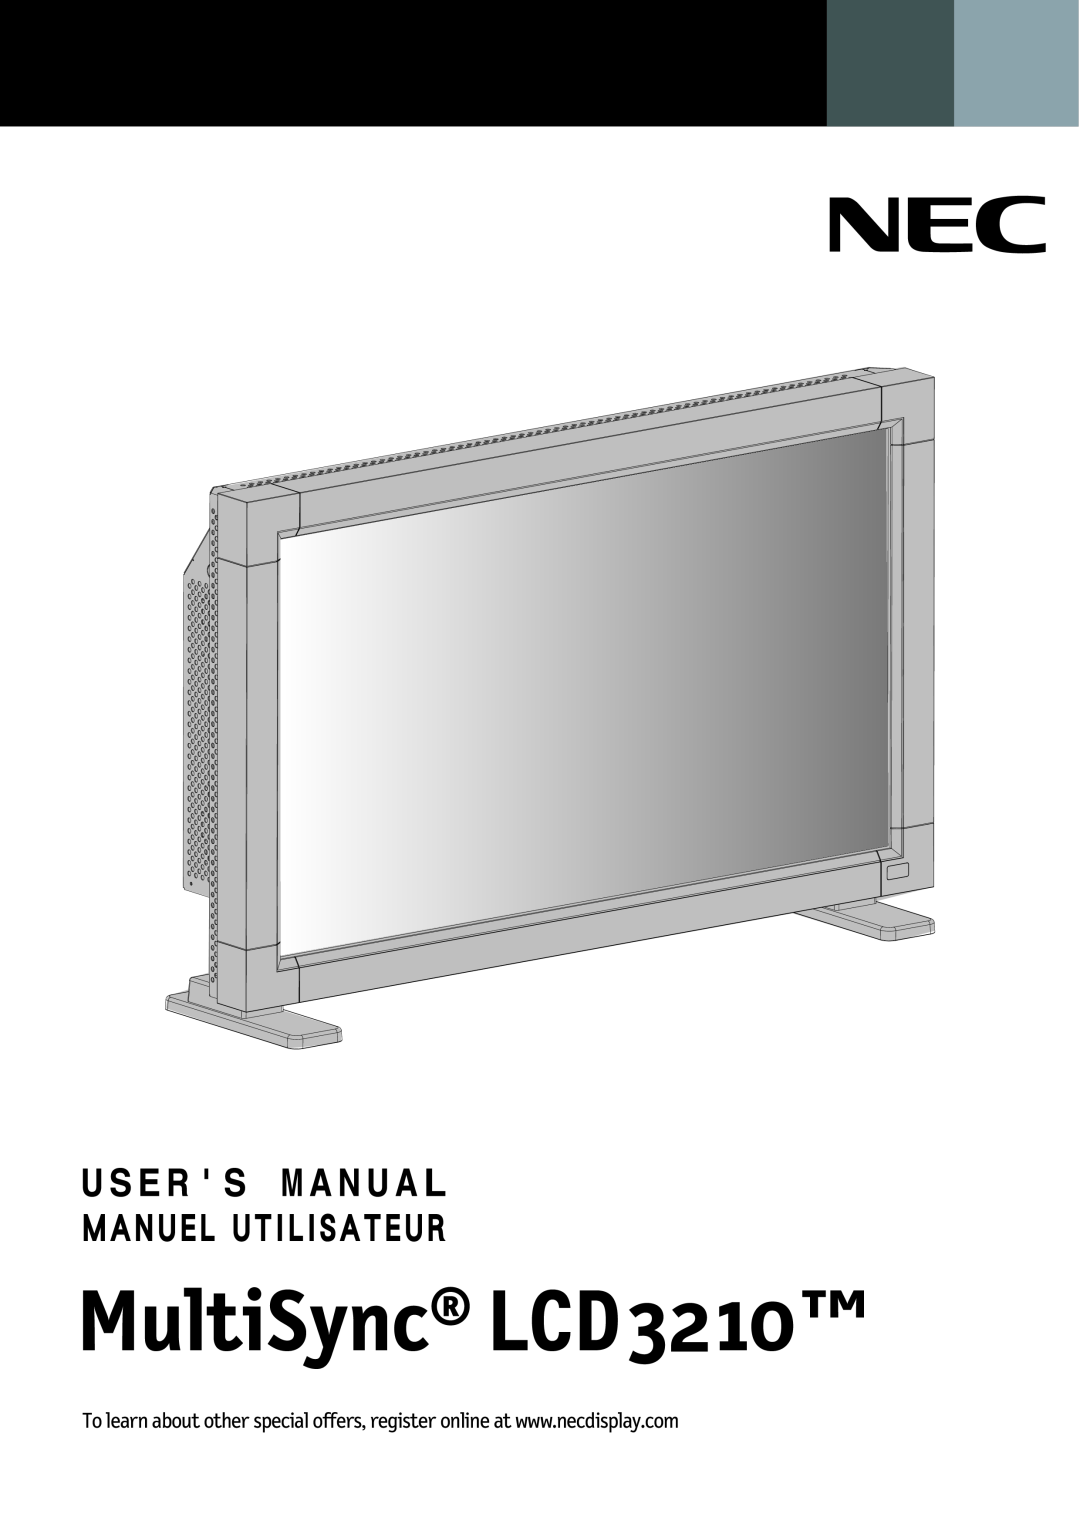 NEC LCD3210 manual Manuel Utilisateur 